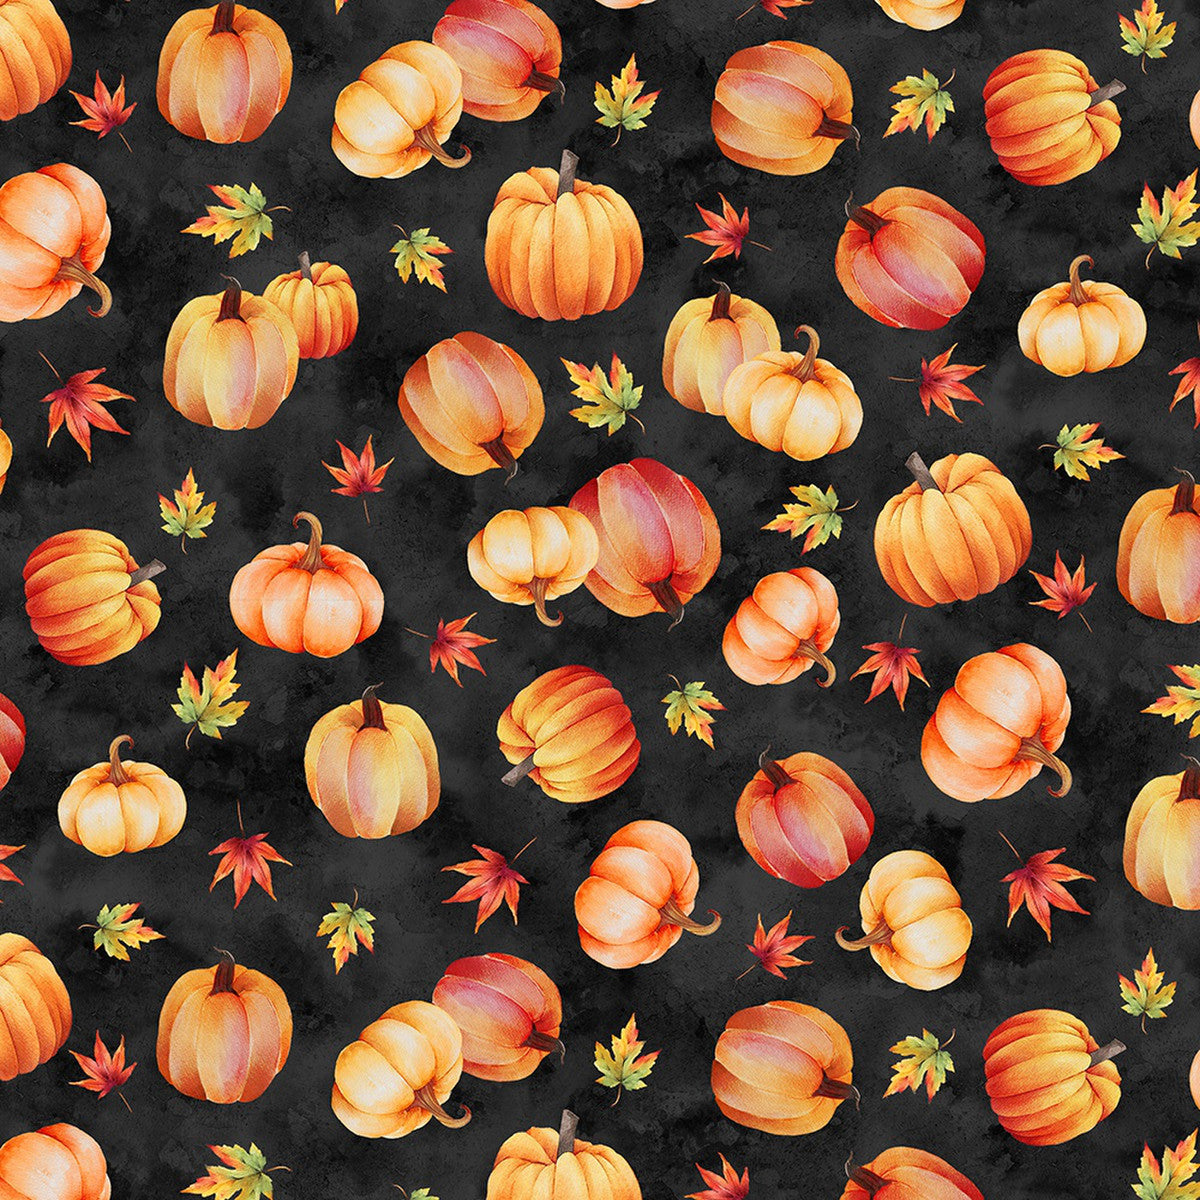 44 x 36 Wilmington Prints Tossed Pumpkins on Black Thanksgiving 100% Cotton Fabric